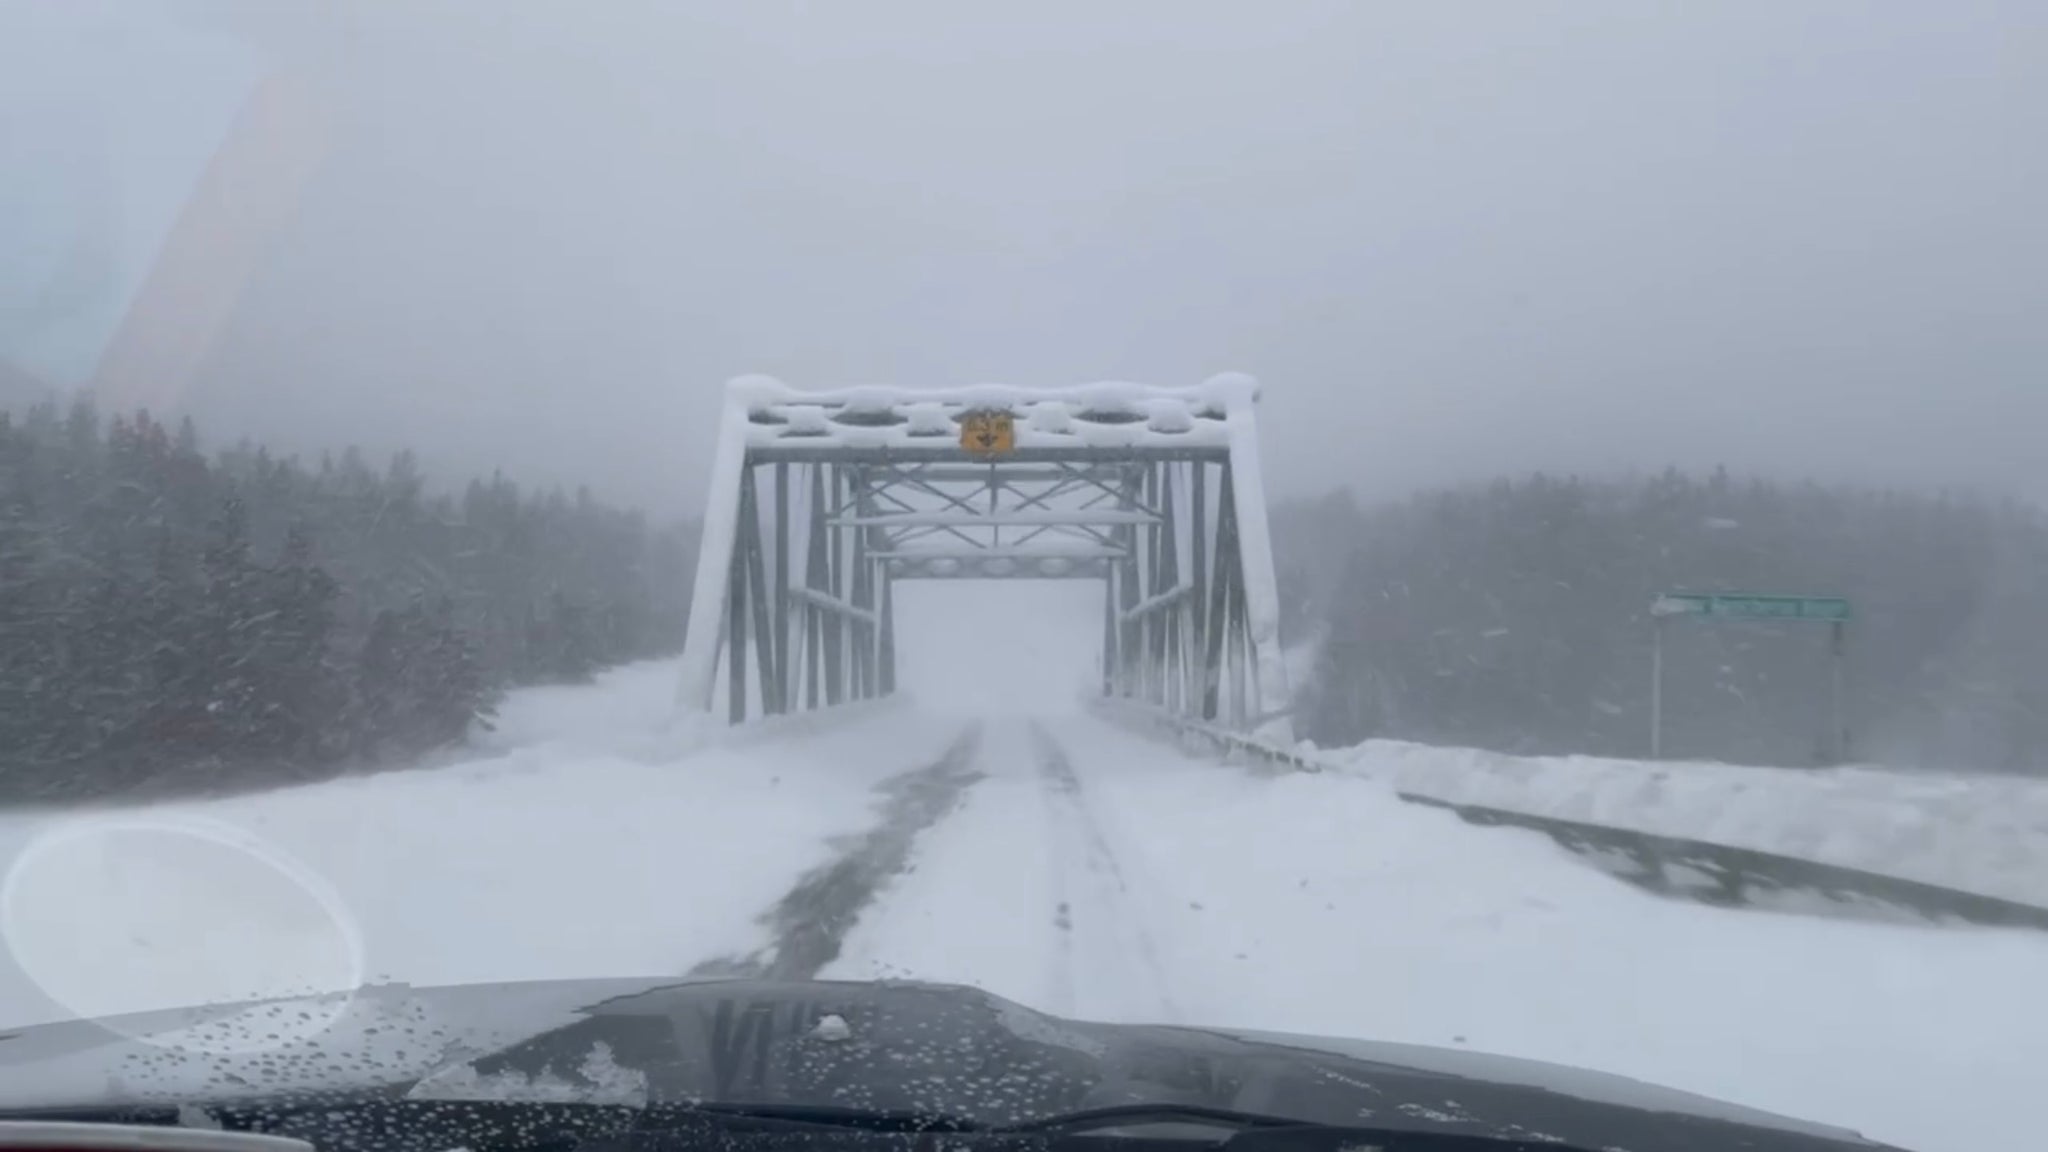 Snow covered Yukon scenery and metal truss bridge